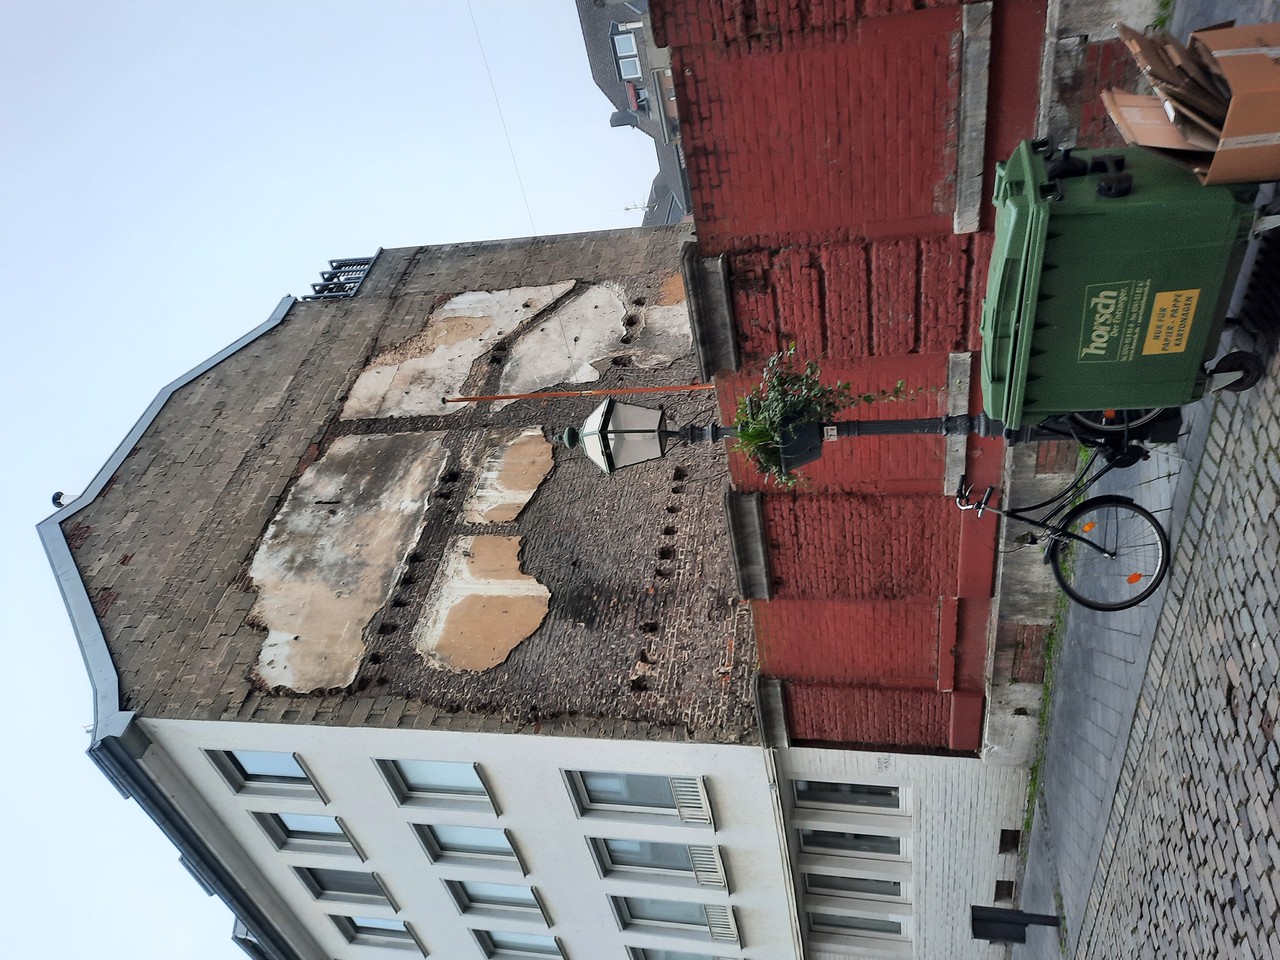 A gap in the buildings on Annastraße: Remnants of Wartime Destruction